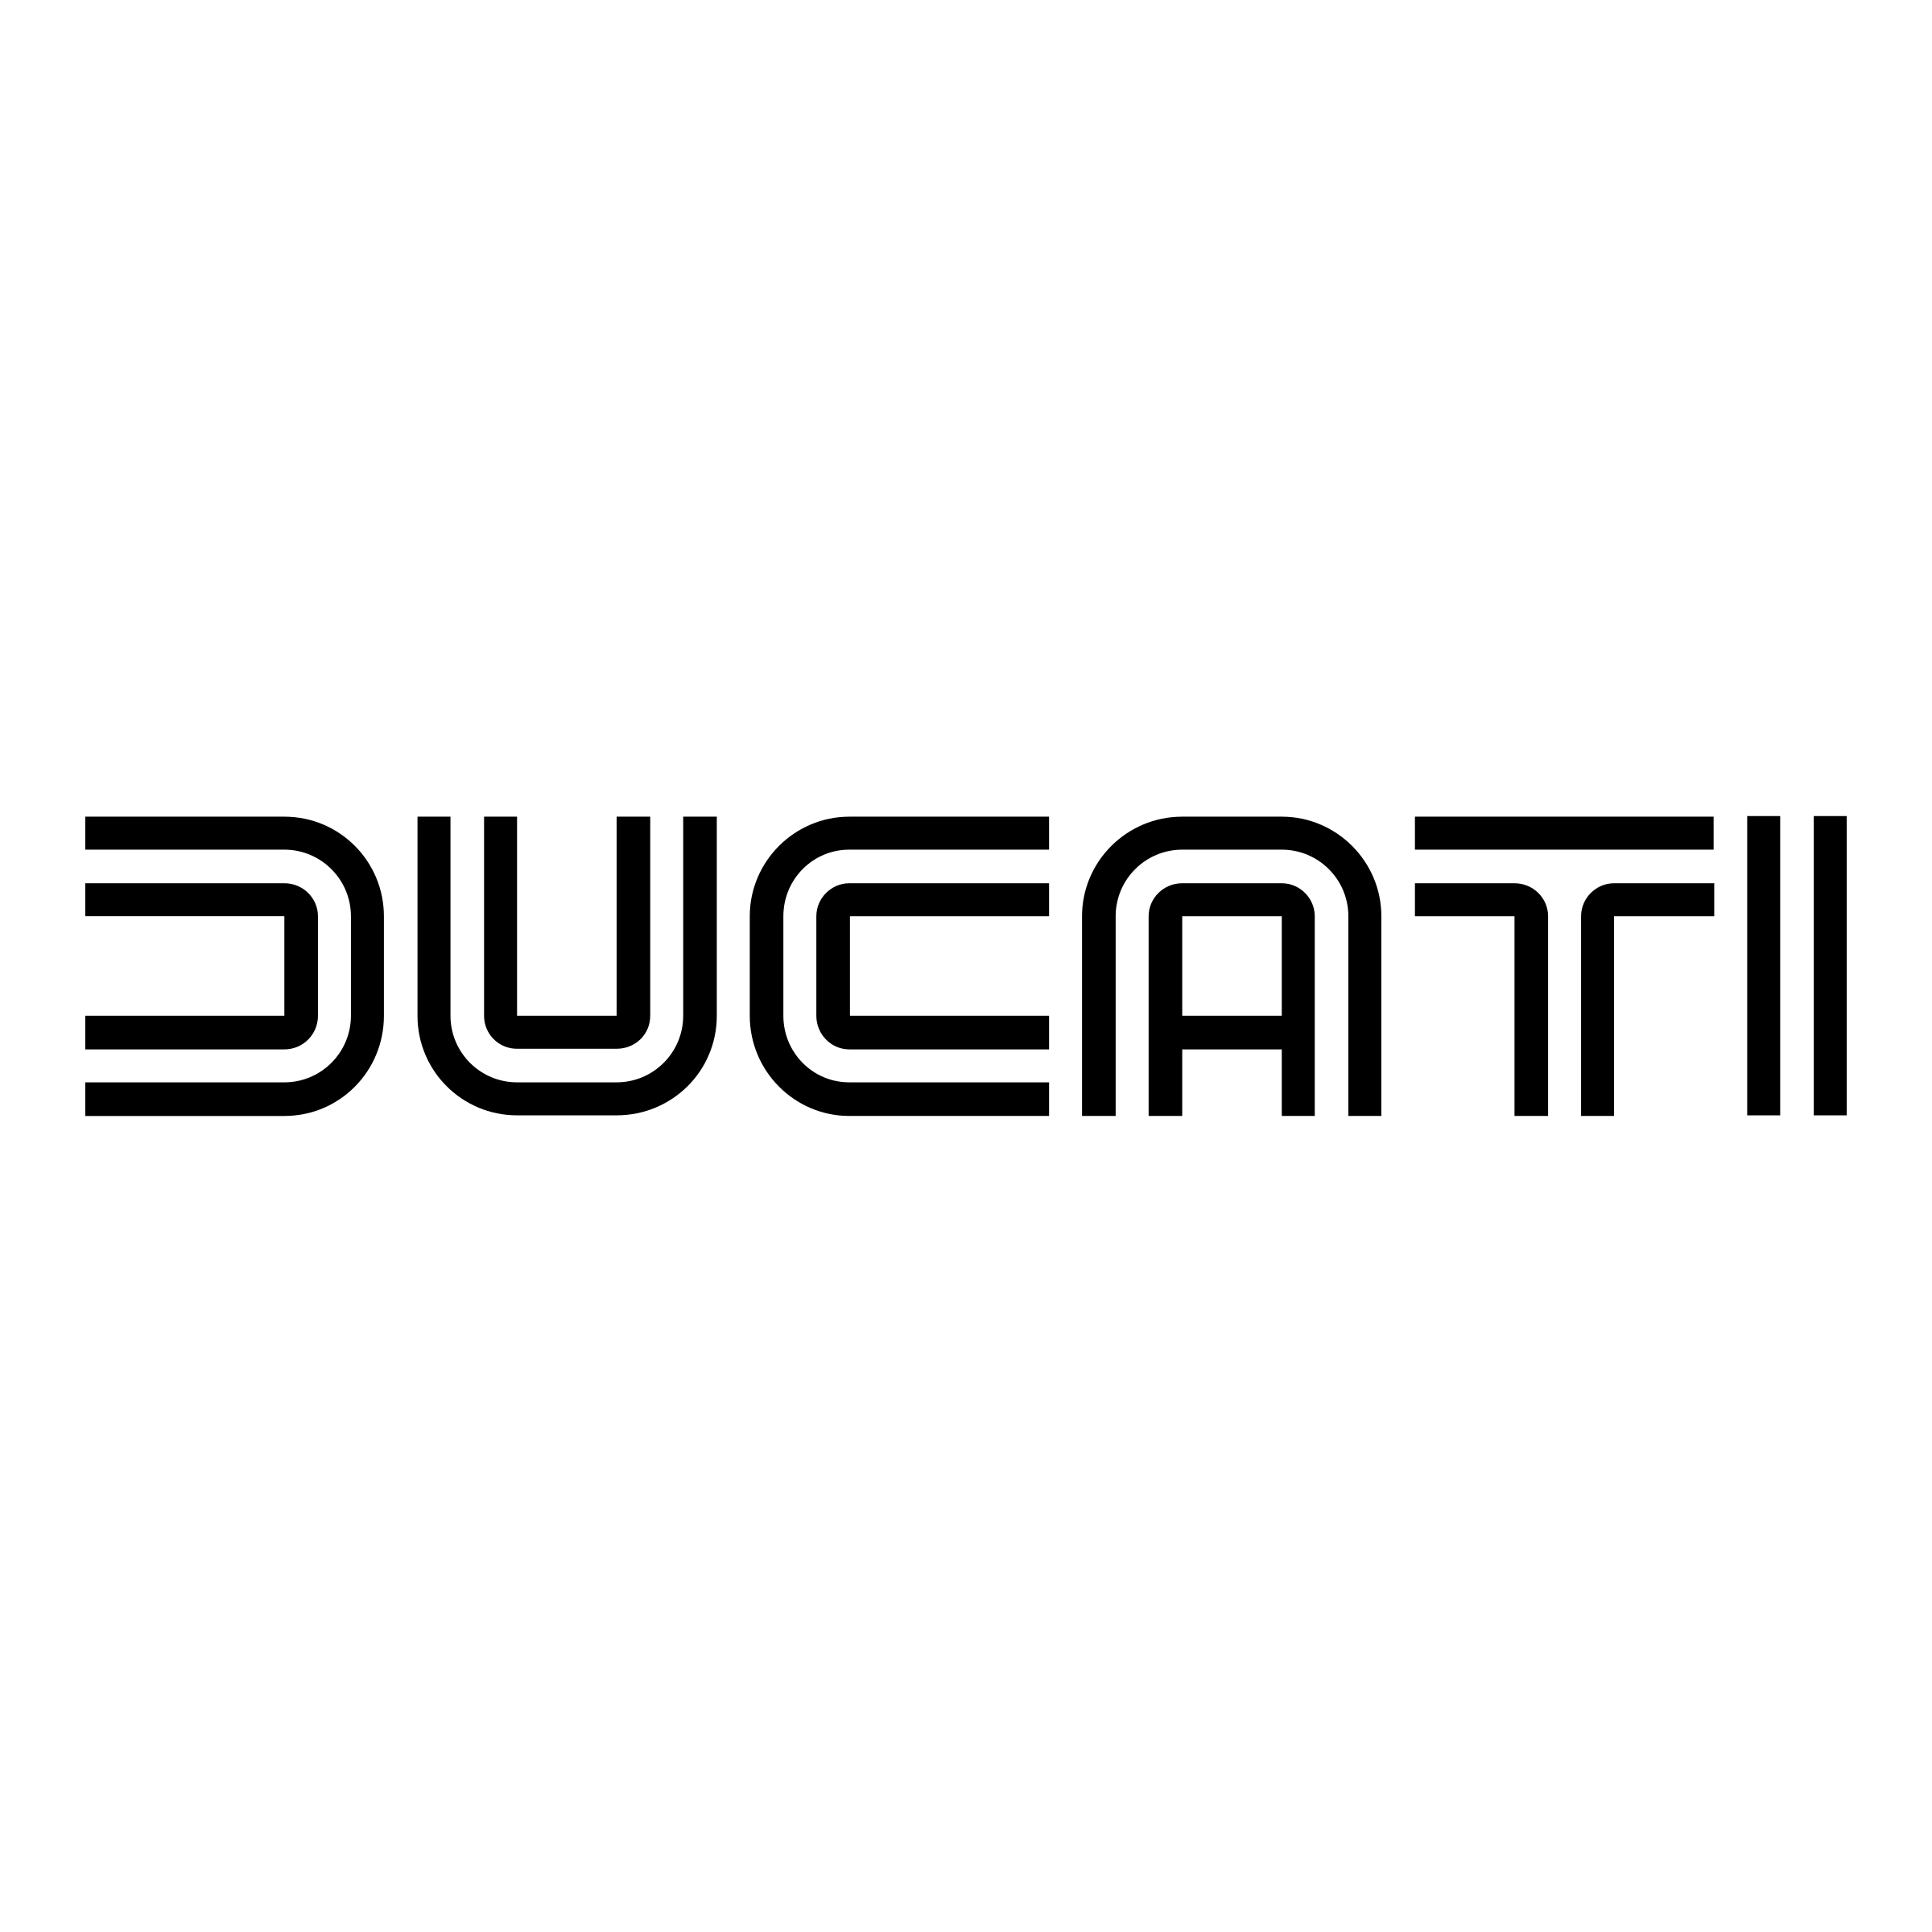 Ducati Logo - Ducati Logo PNG Transparent & SVG Vector - Freebie Supply